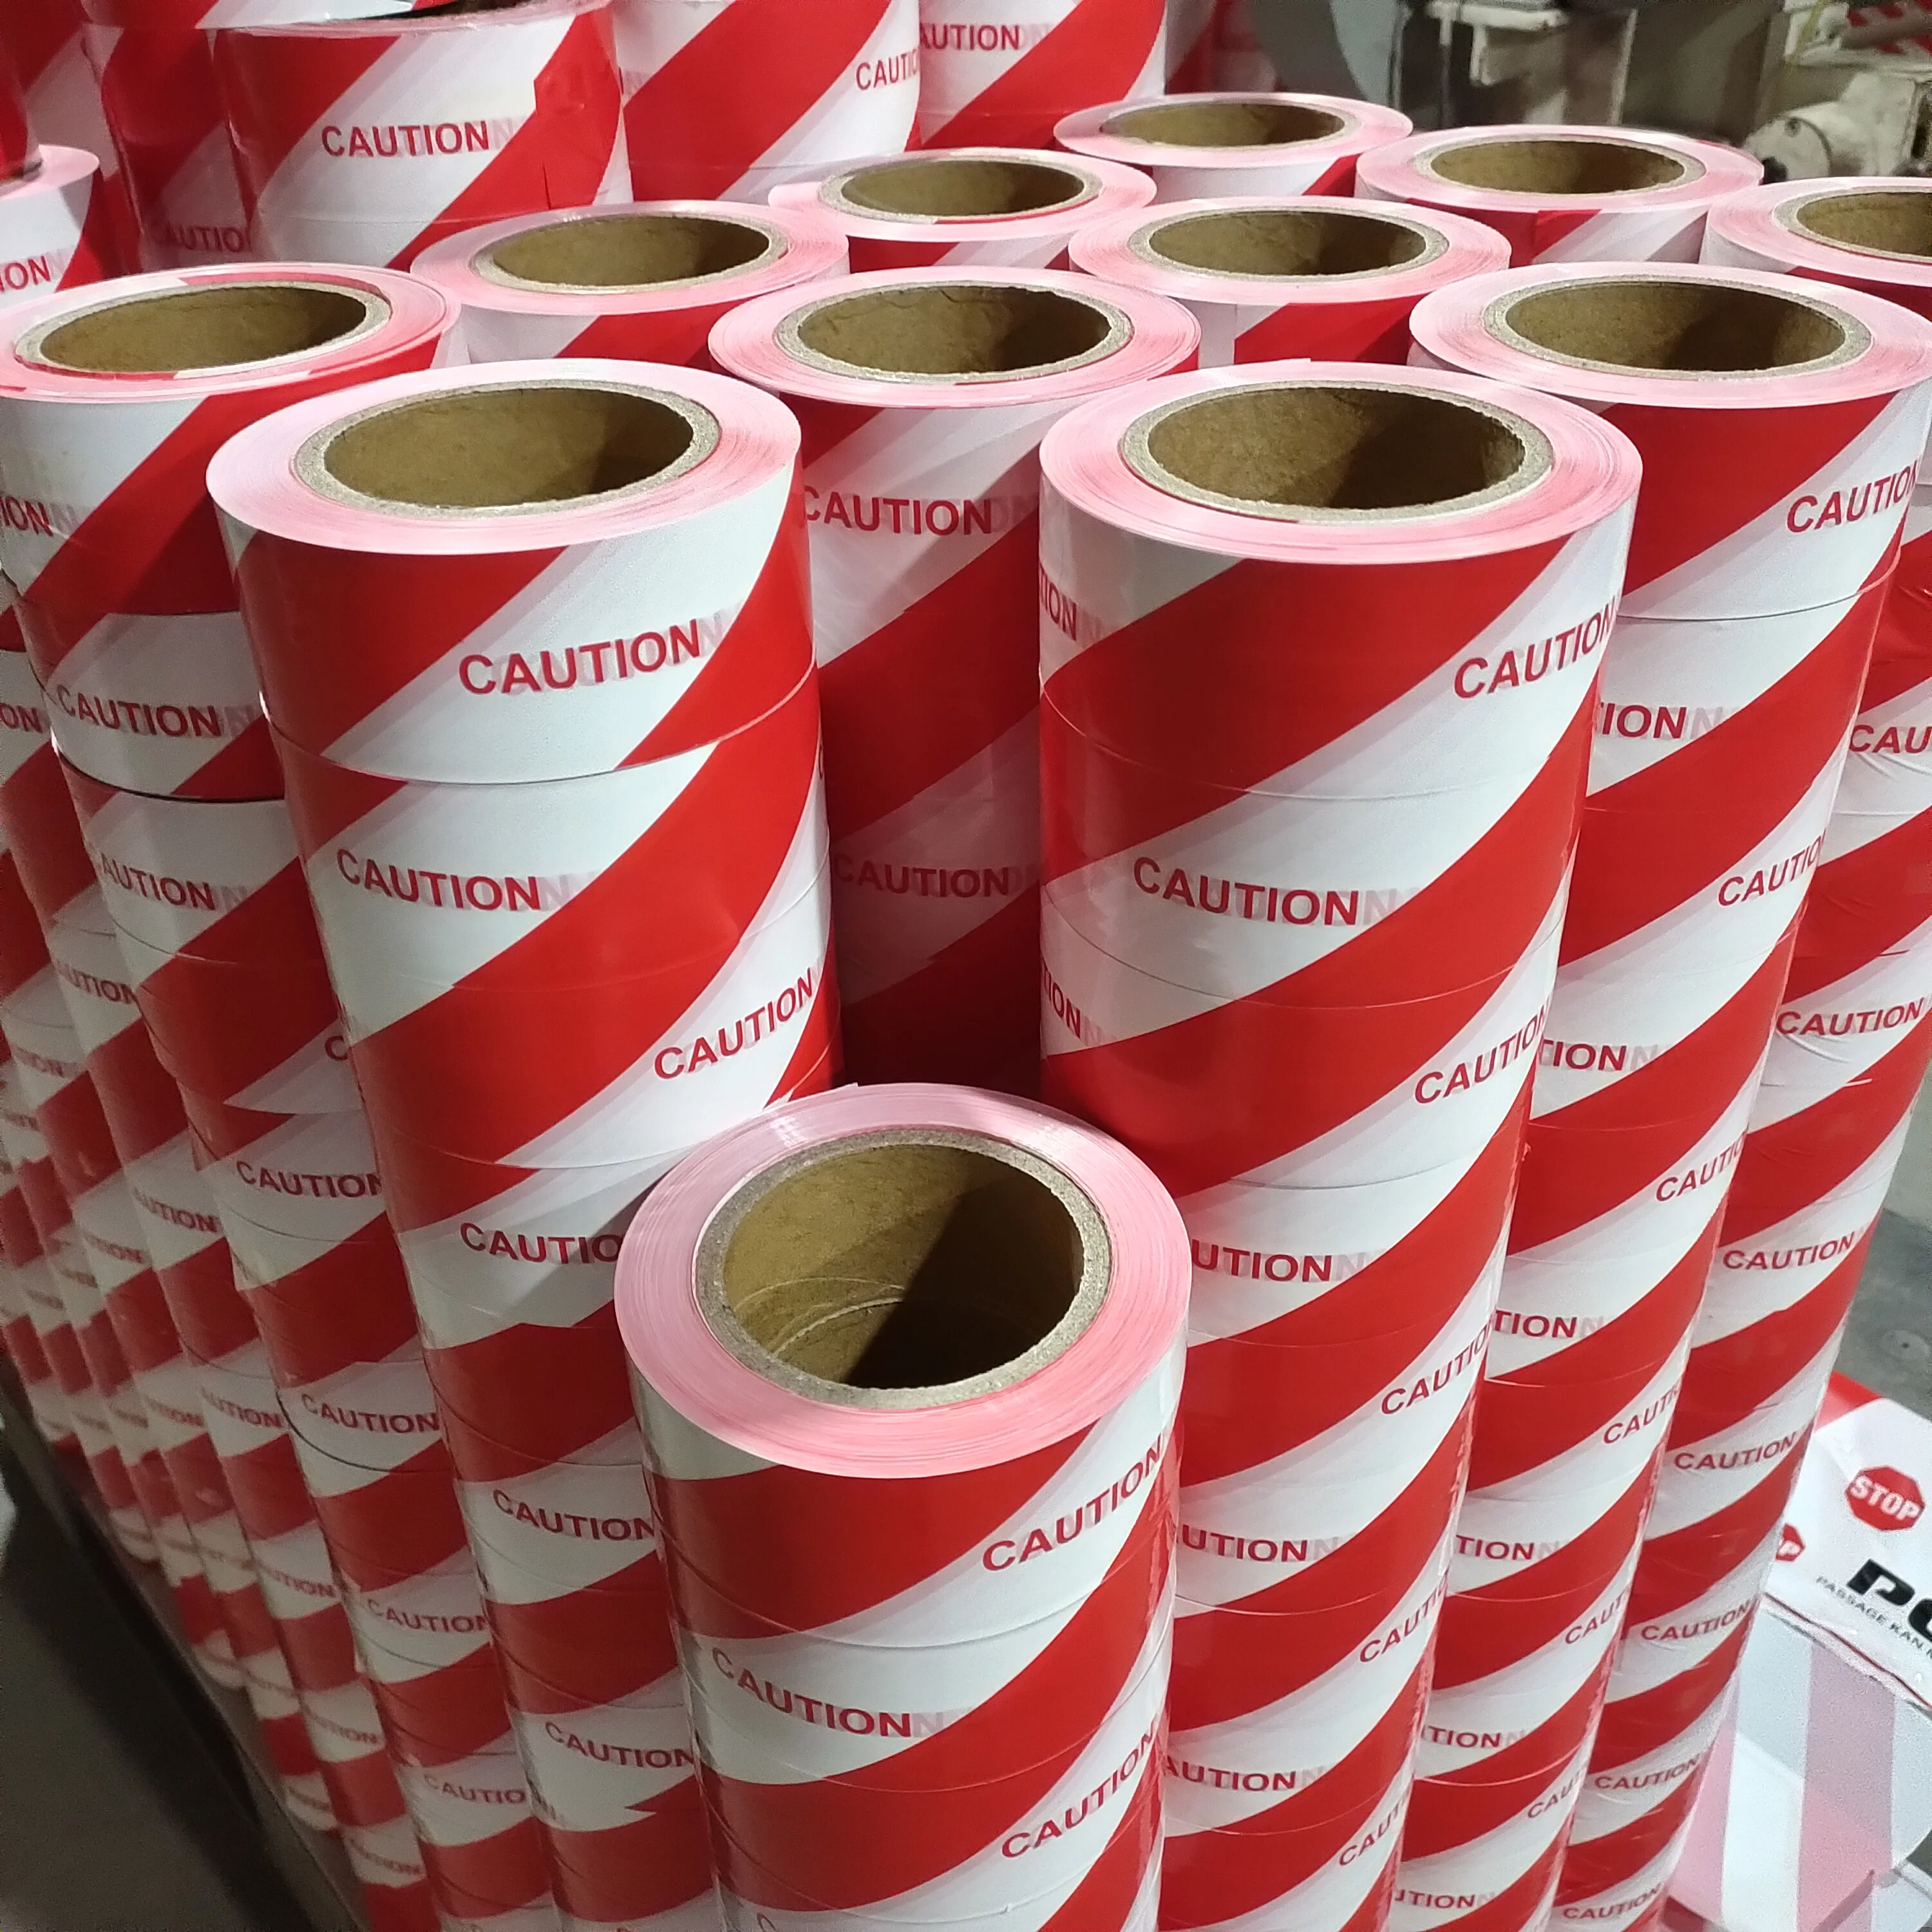 
Non adhesive PE warning tape red white pattern barricade tape 